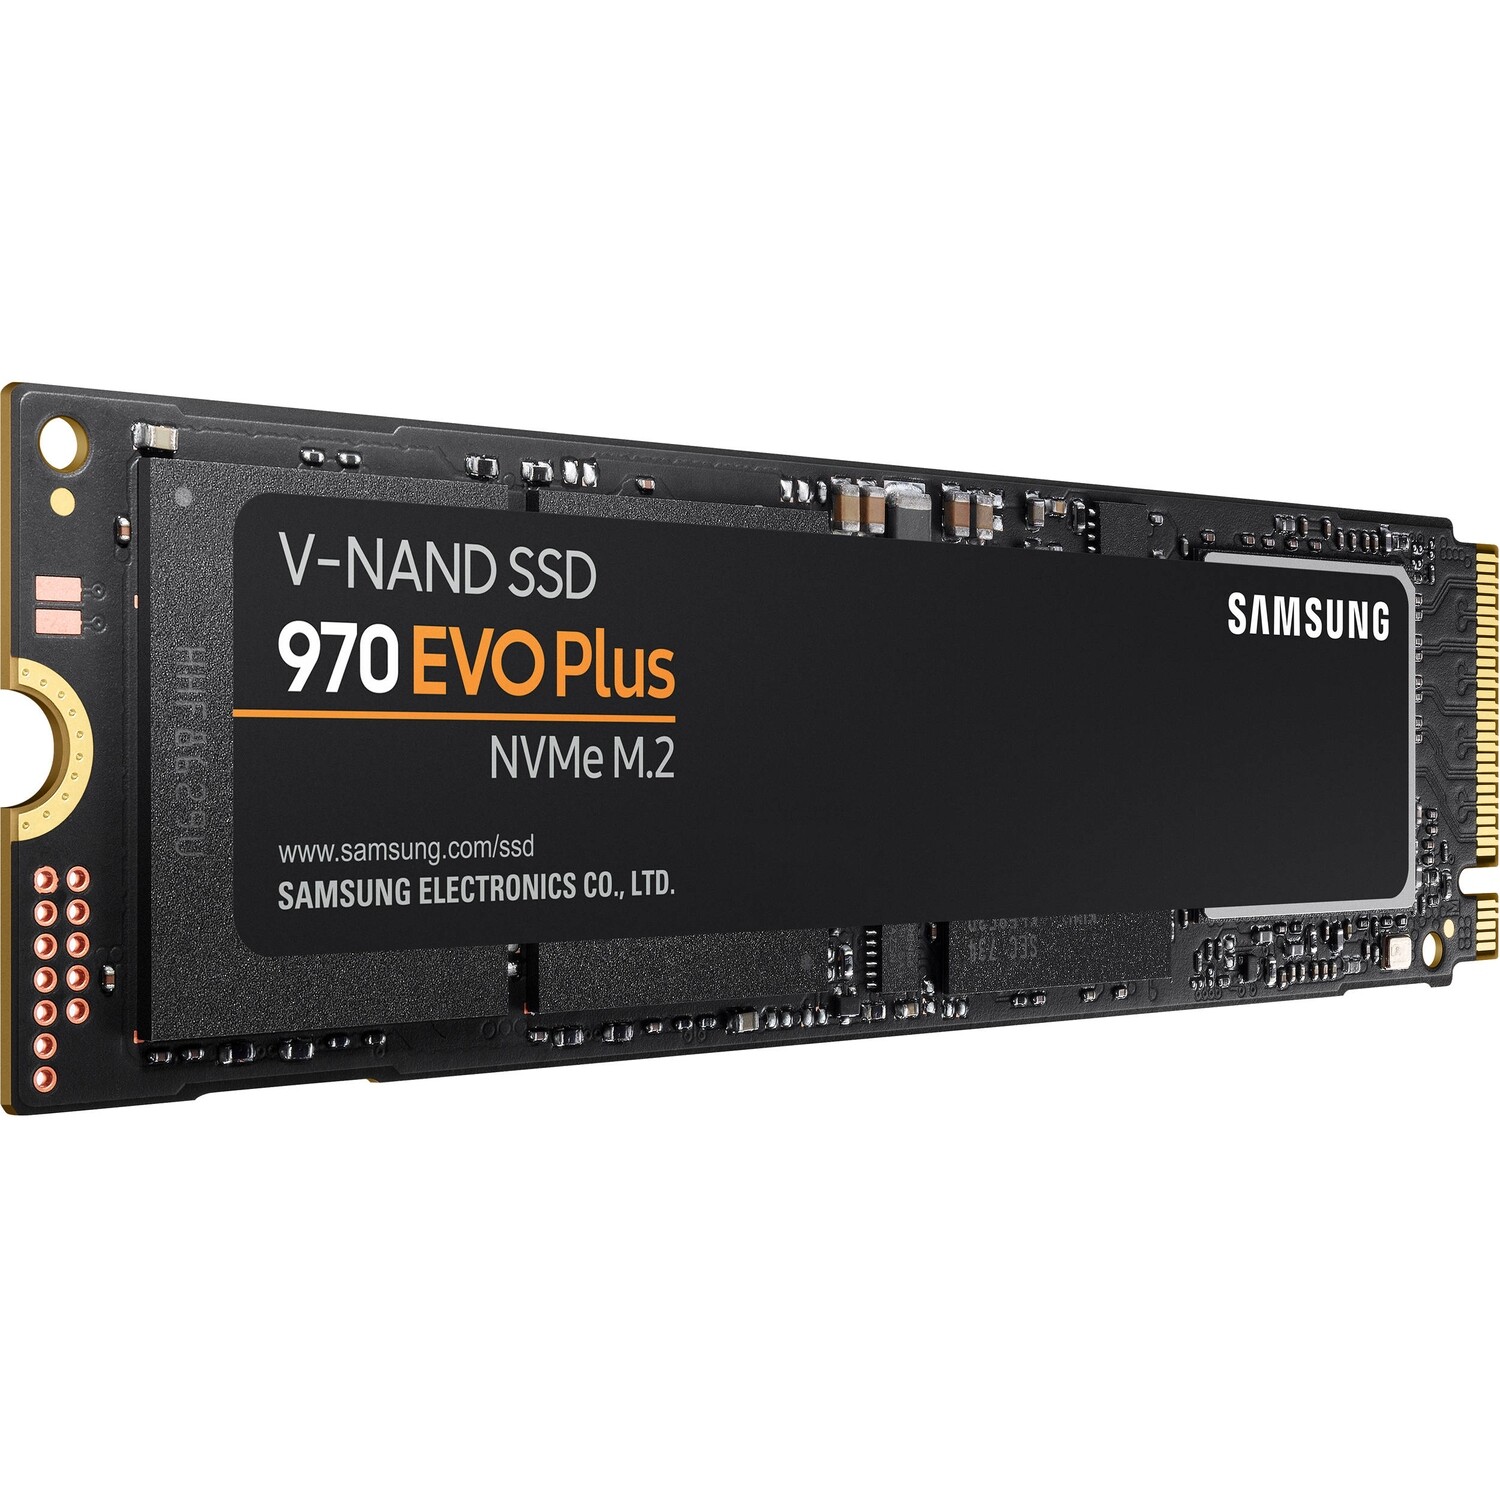 SAMSUNG 970 EVO PLUS 250GB M.2 NVME SSD PCIe Gen 3.0